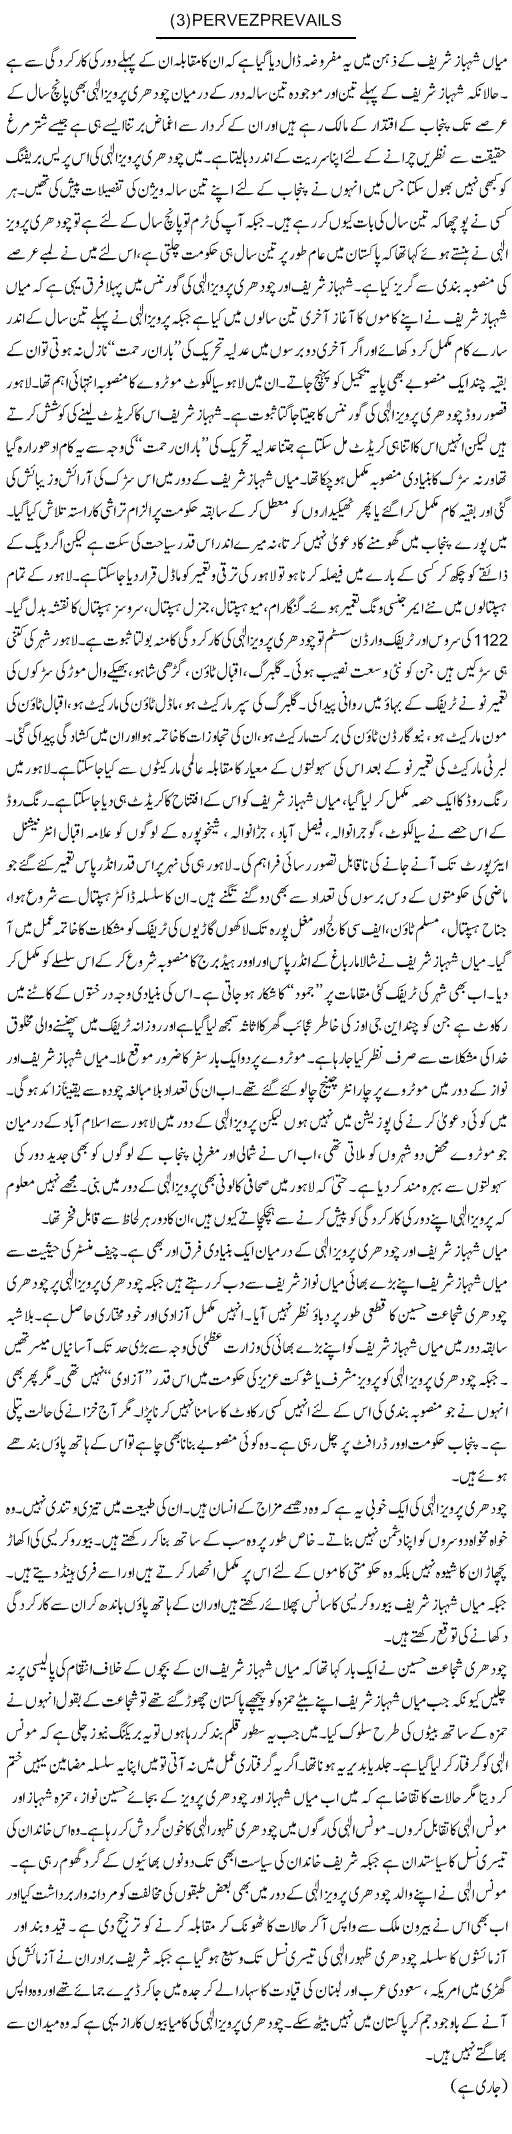 Pervez Prevails Express Column Asadullah Ghalib 18 March 2011